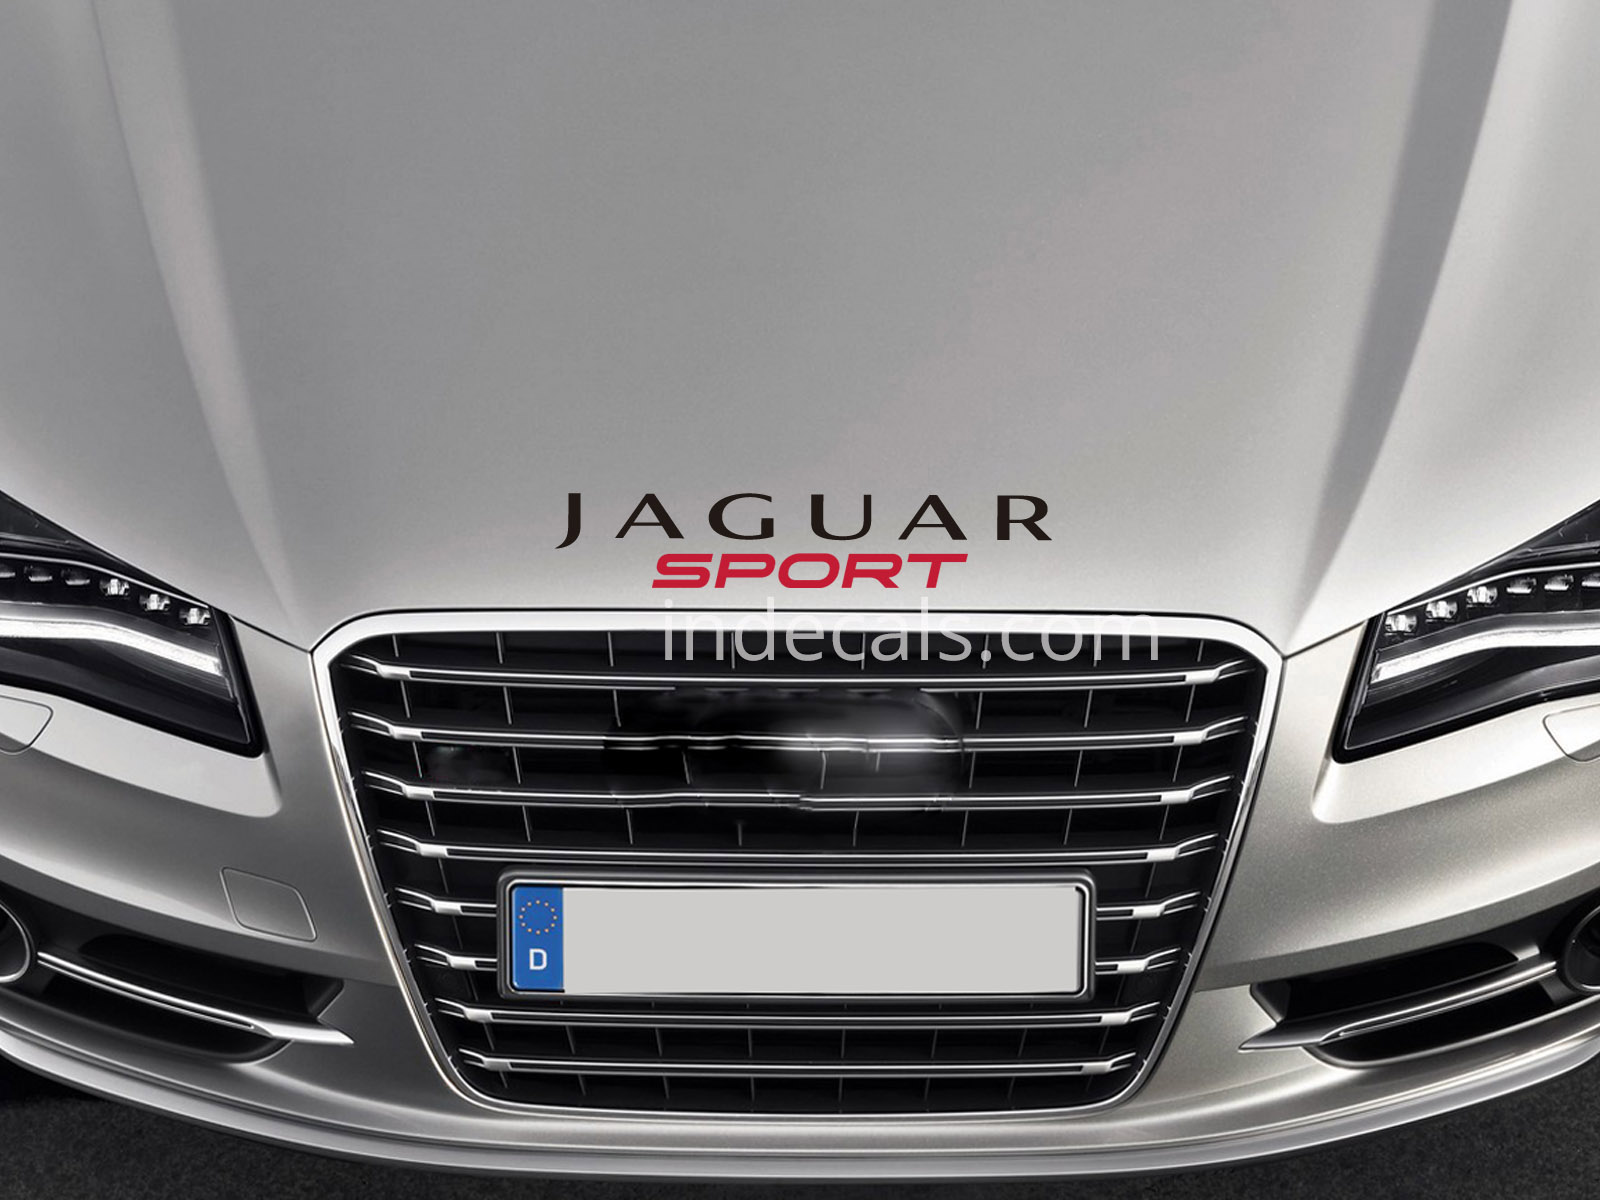 1 x Jaguar Sport Sticker for Bonnet - Black & Red